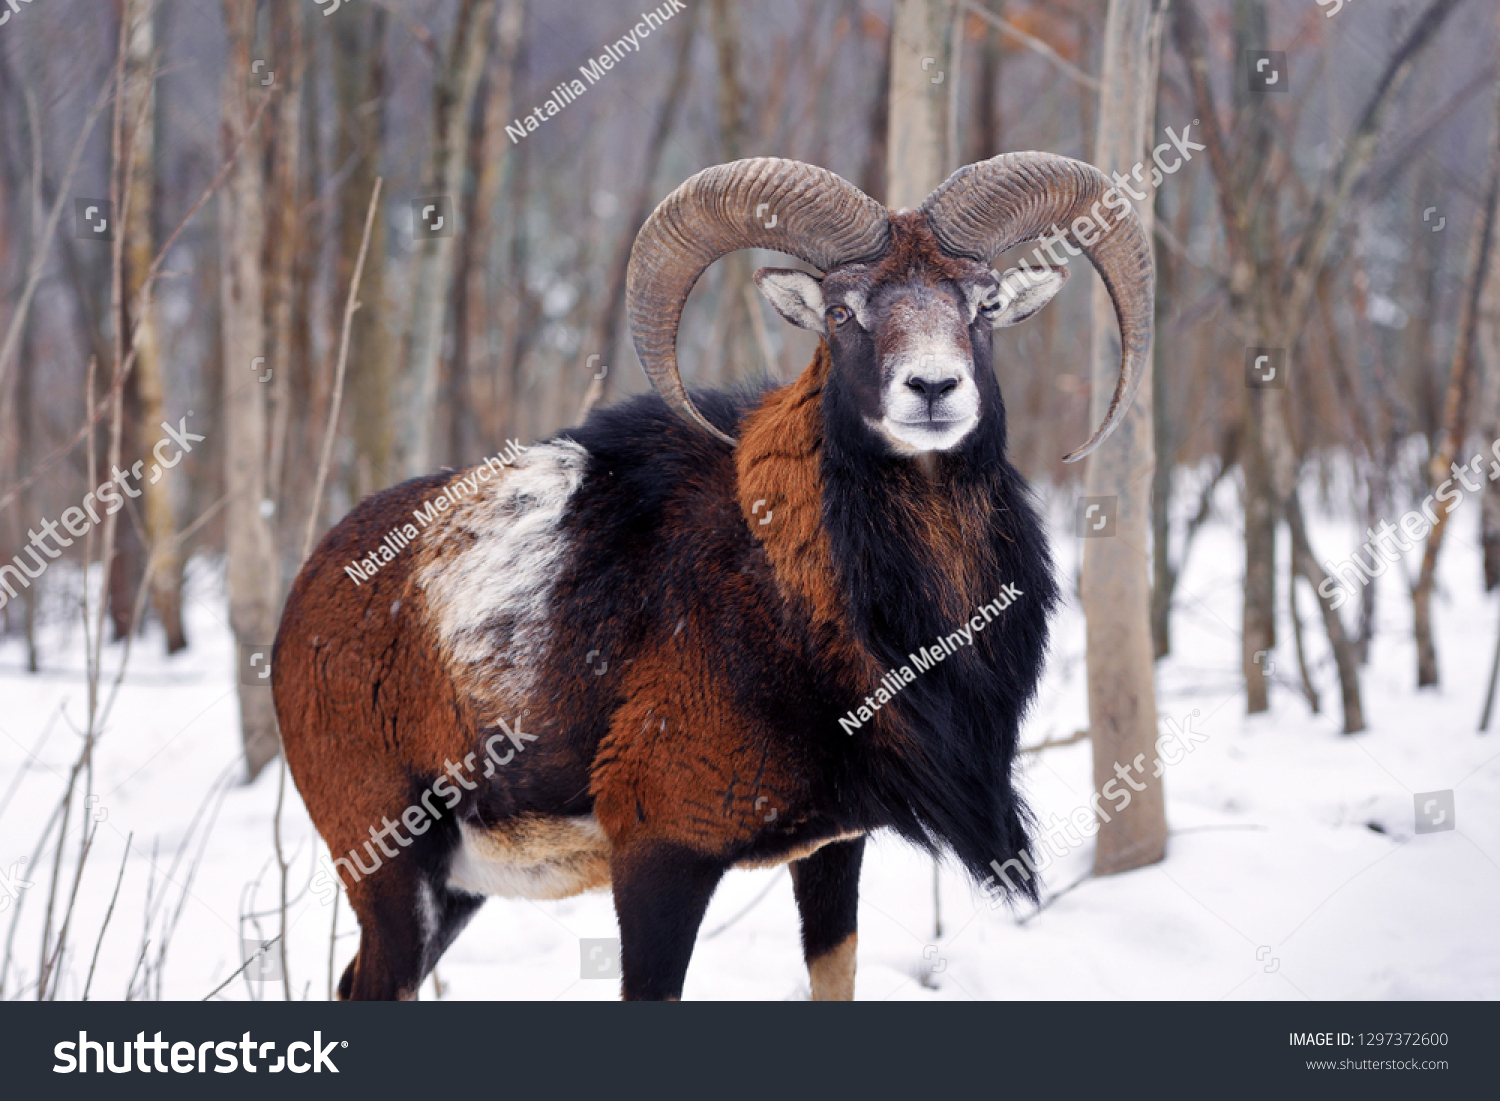 Mouflon Male (Ovis musimon) in the winter forest, horned animal in nature habitat #1297372600